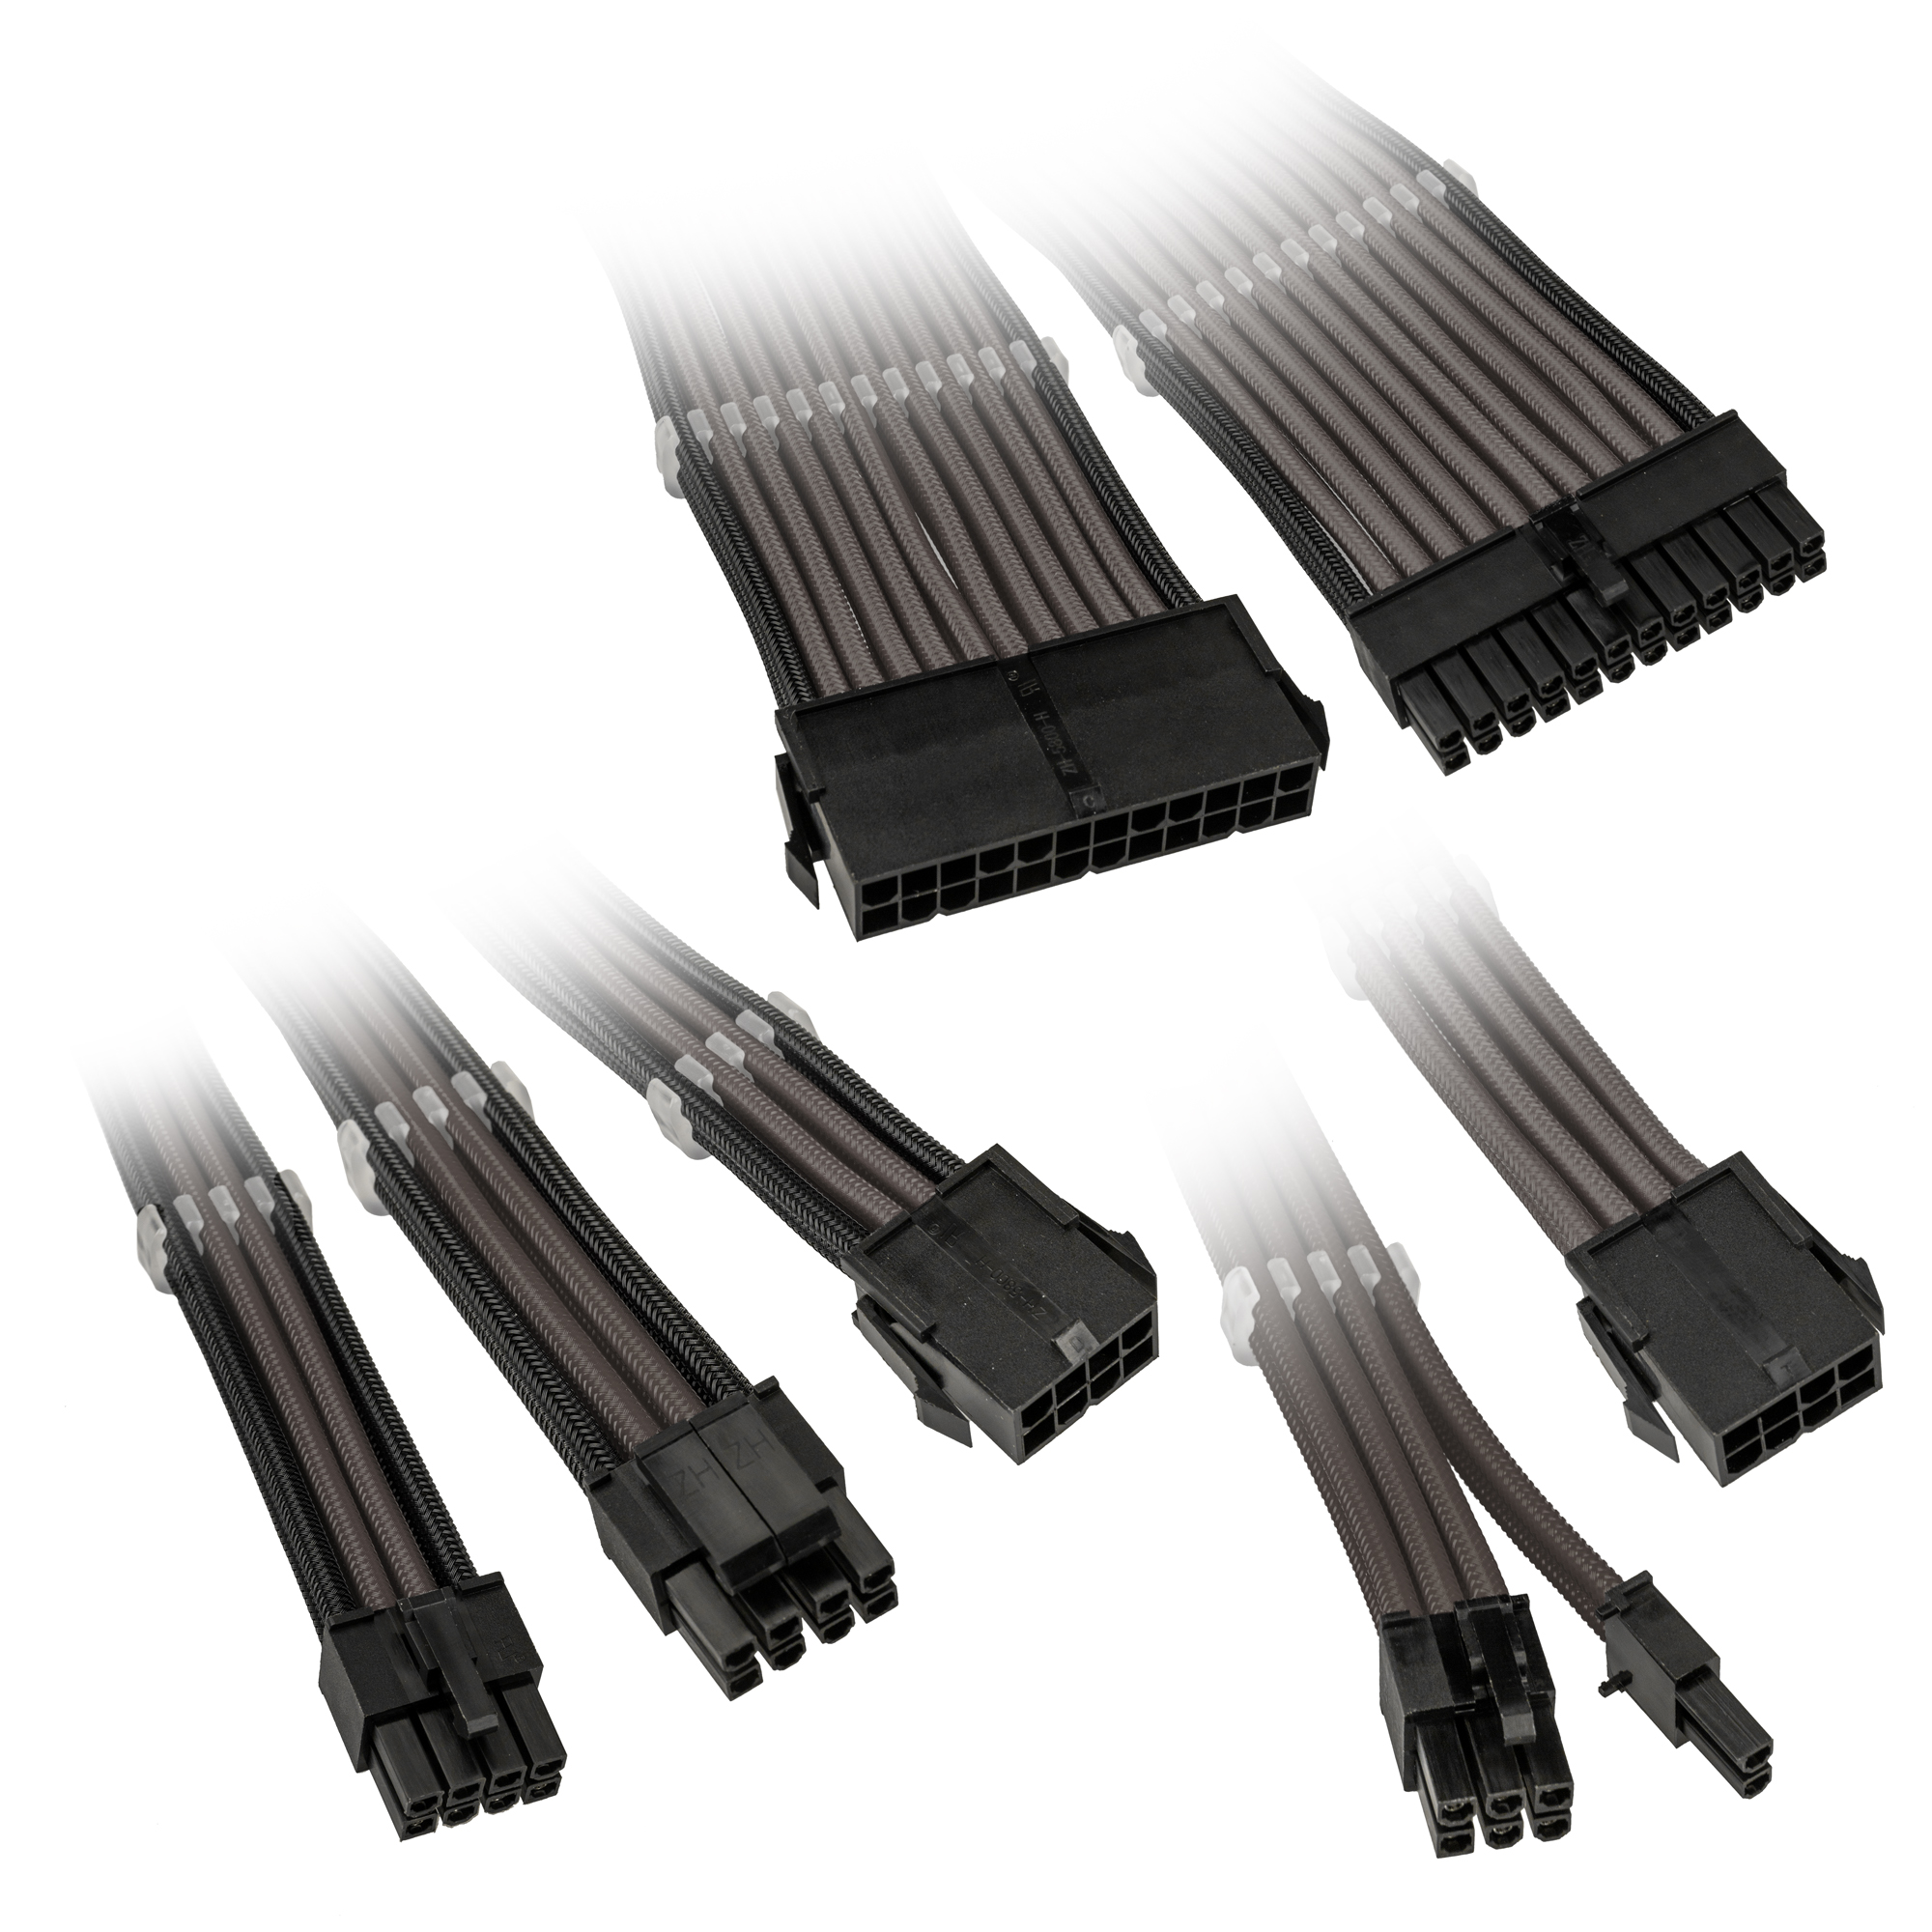 Kolink Core Adept Braided Cable Extension Kit - Gunmetal Grey